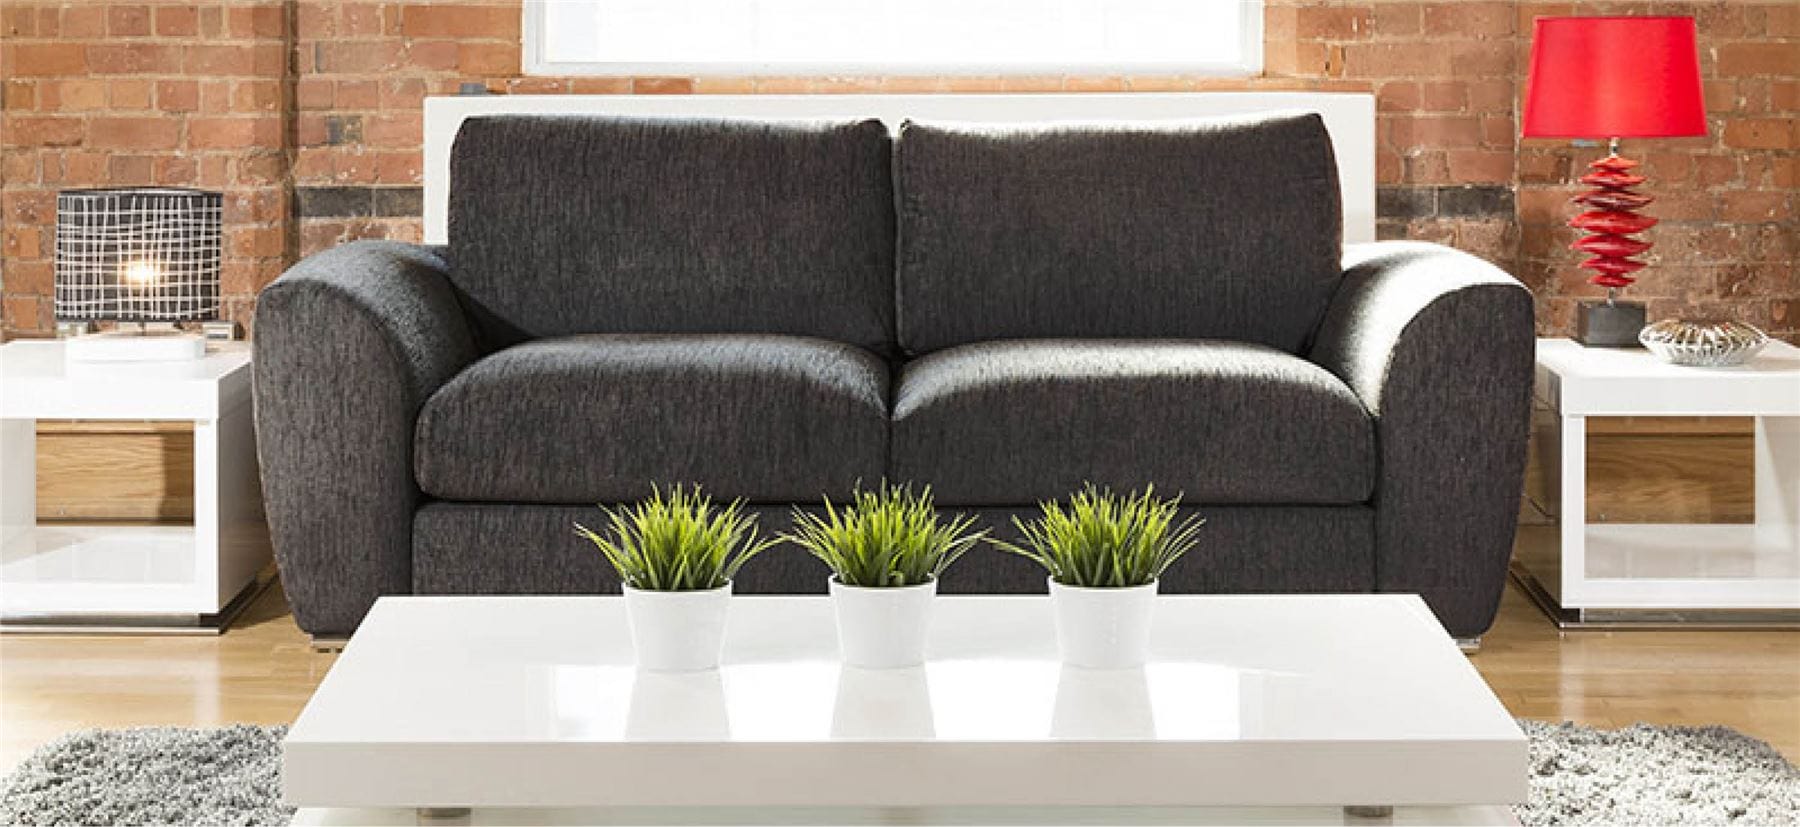 Quatropi Quatropi Modern Large 3 Seater Settee/Sofa Made to Order Grey Fabric